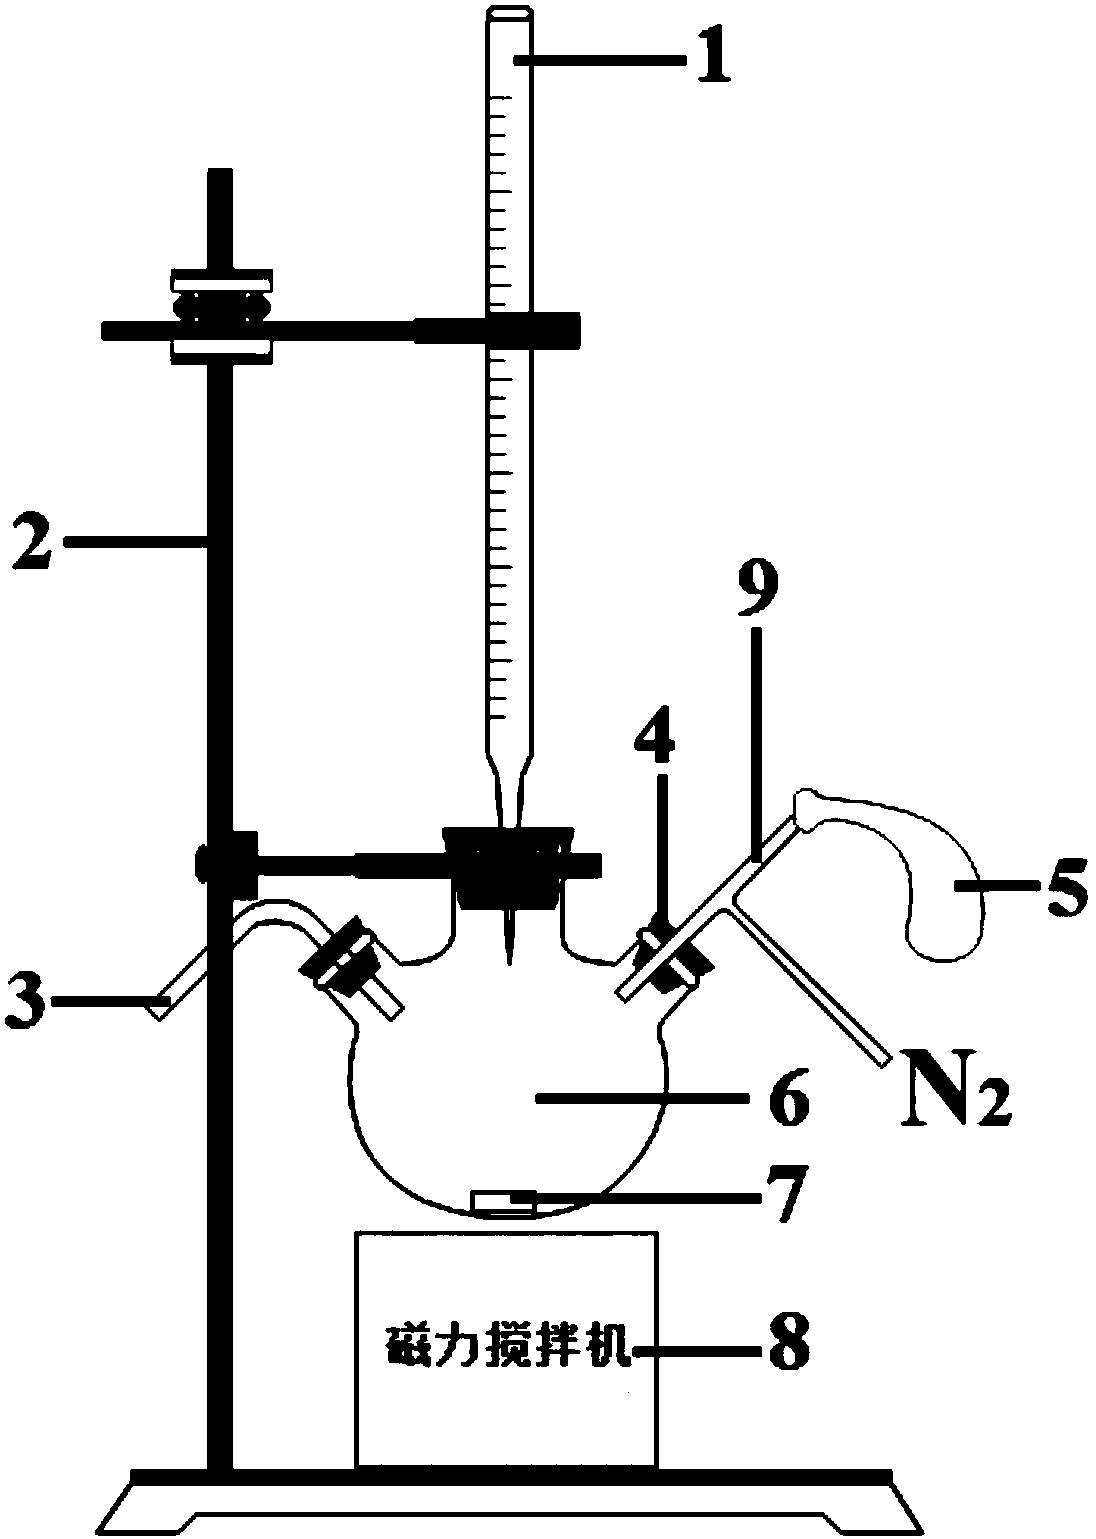 Iodometric method for determining oxygen vacancy concentration in barium ferrite-based lead-free piezoelectric ceramics